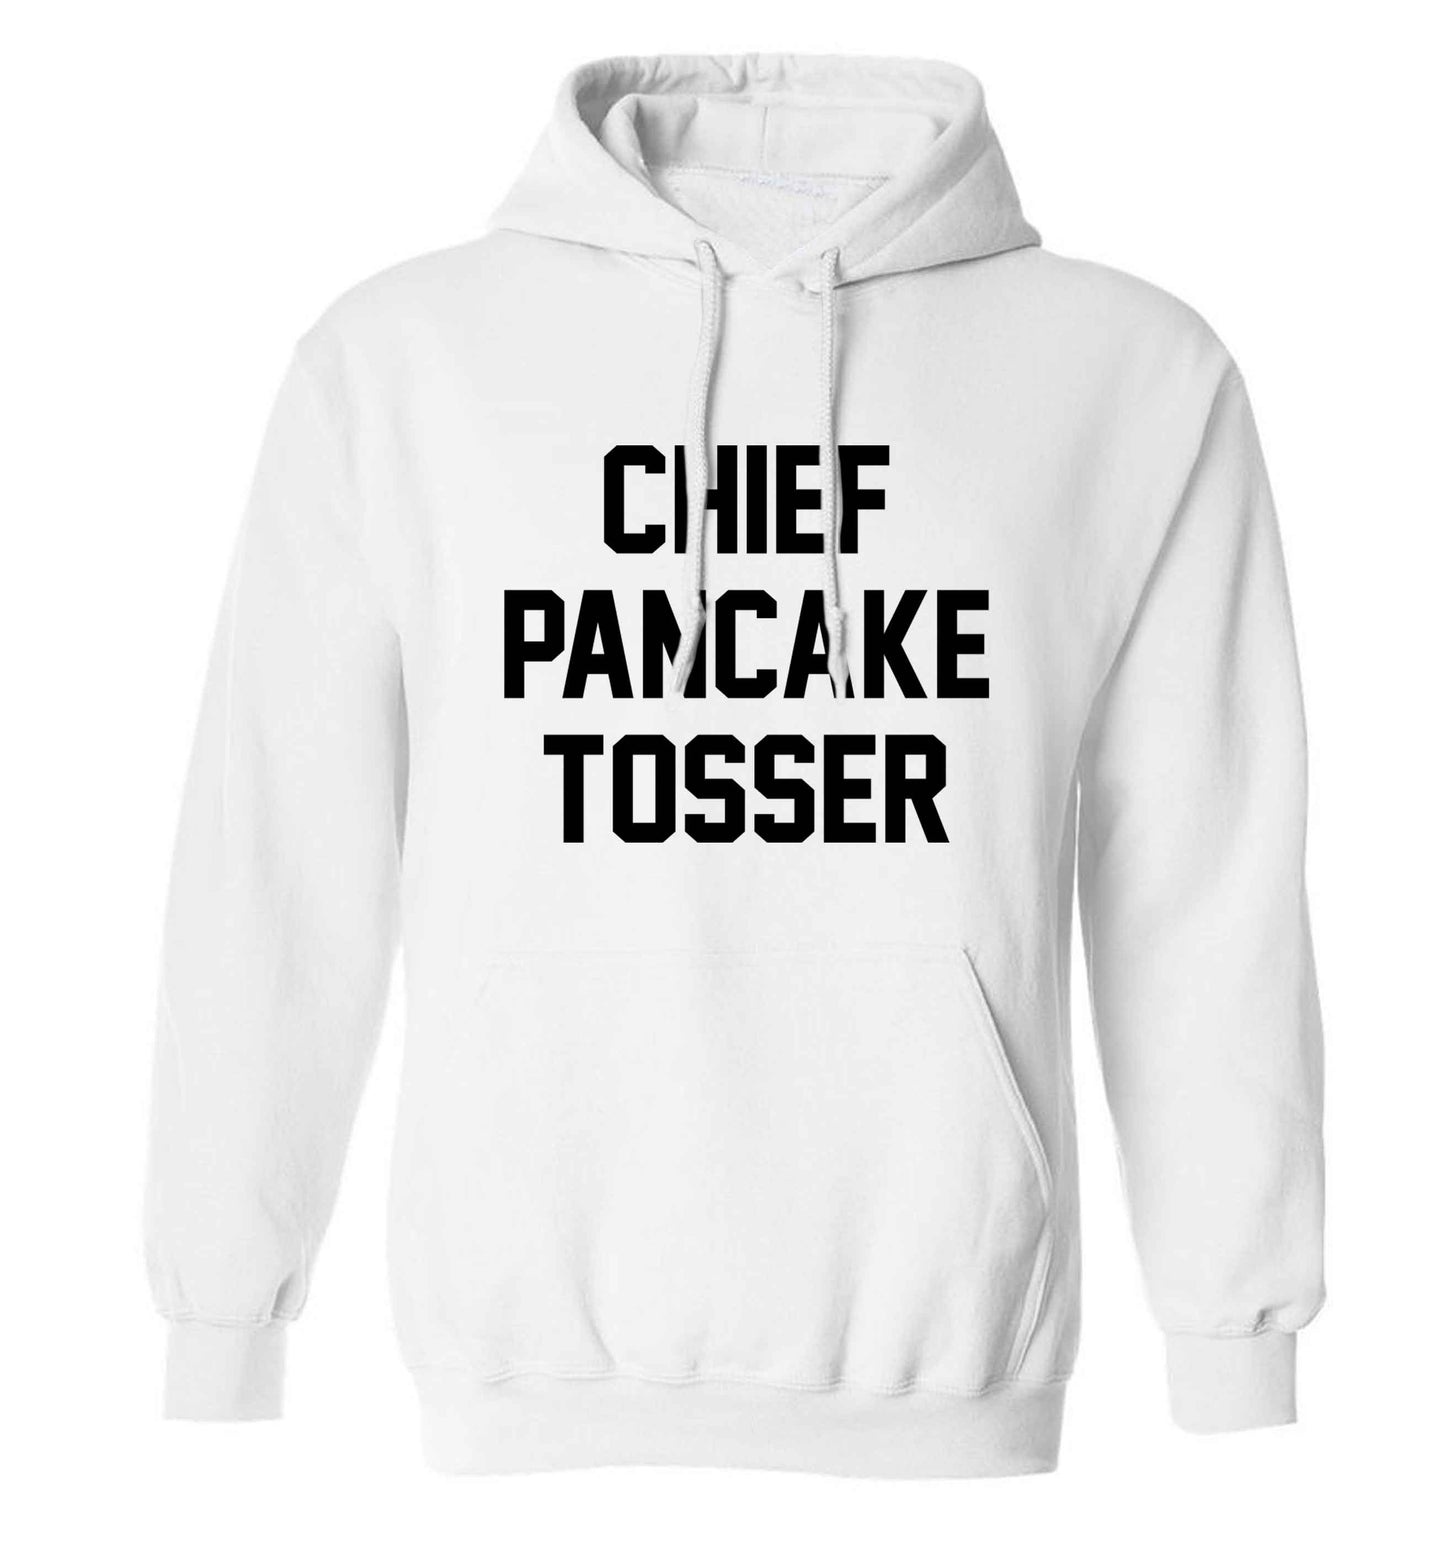 Chief pancake tosser adults unisex white hoodie 2XL